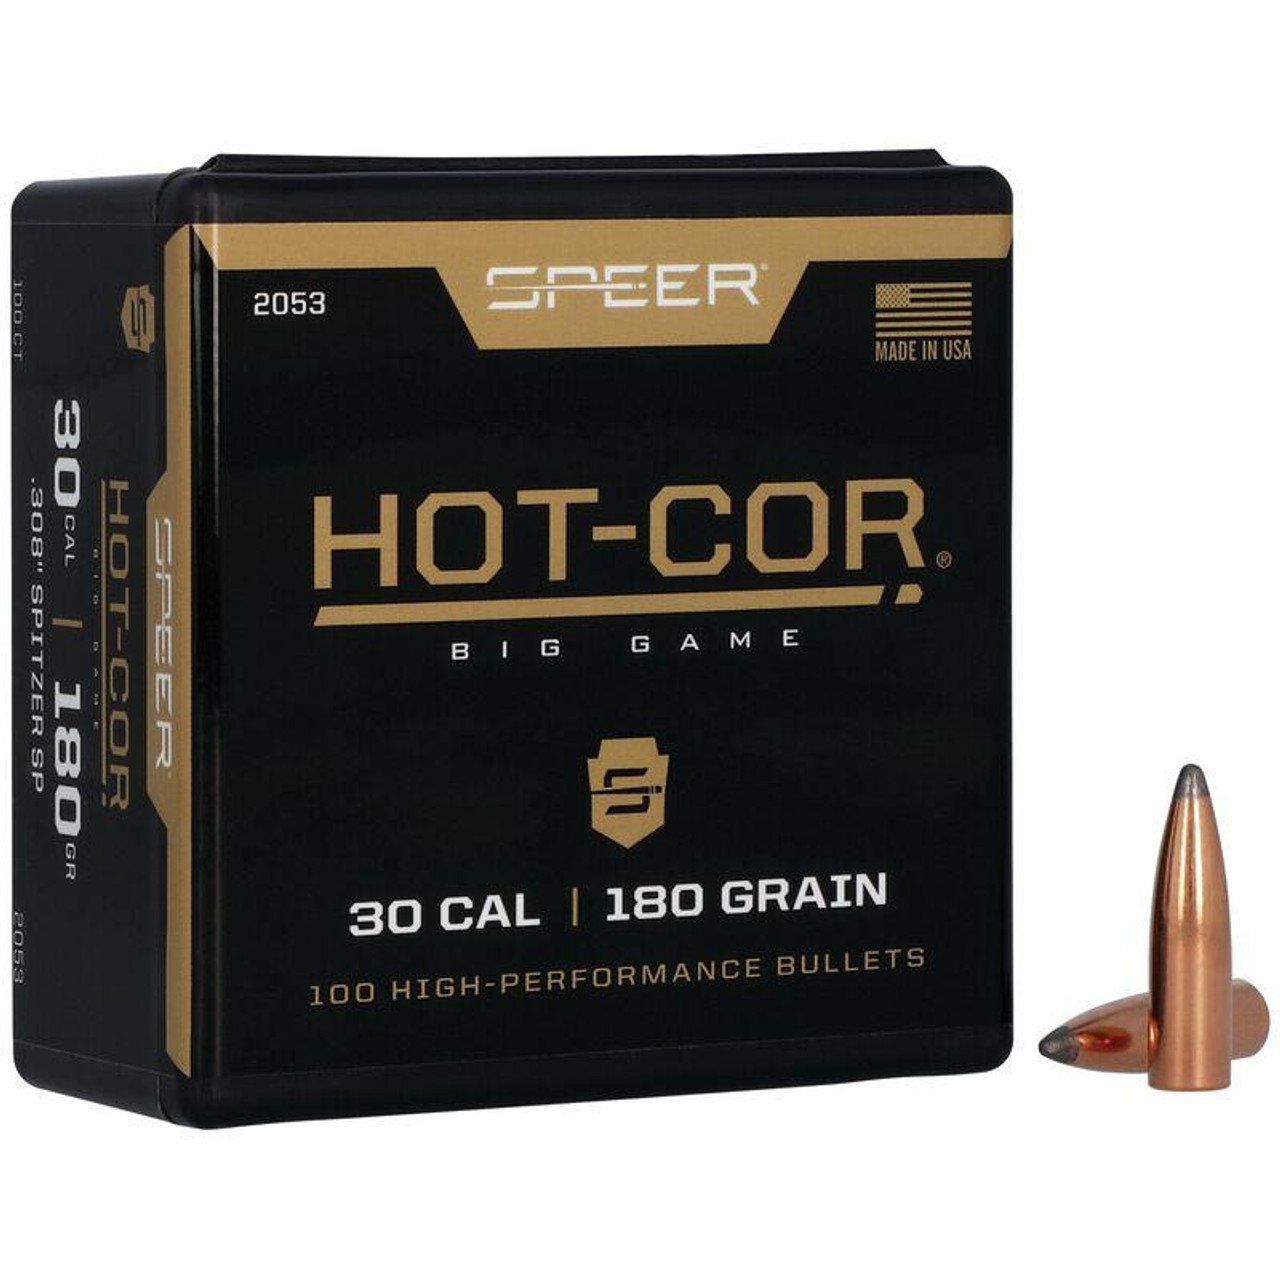 Speer .308 cal 180gr Hot-Cor Rifle Bullets #2053 (1-100 ct box)